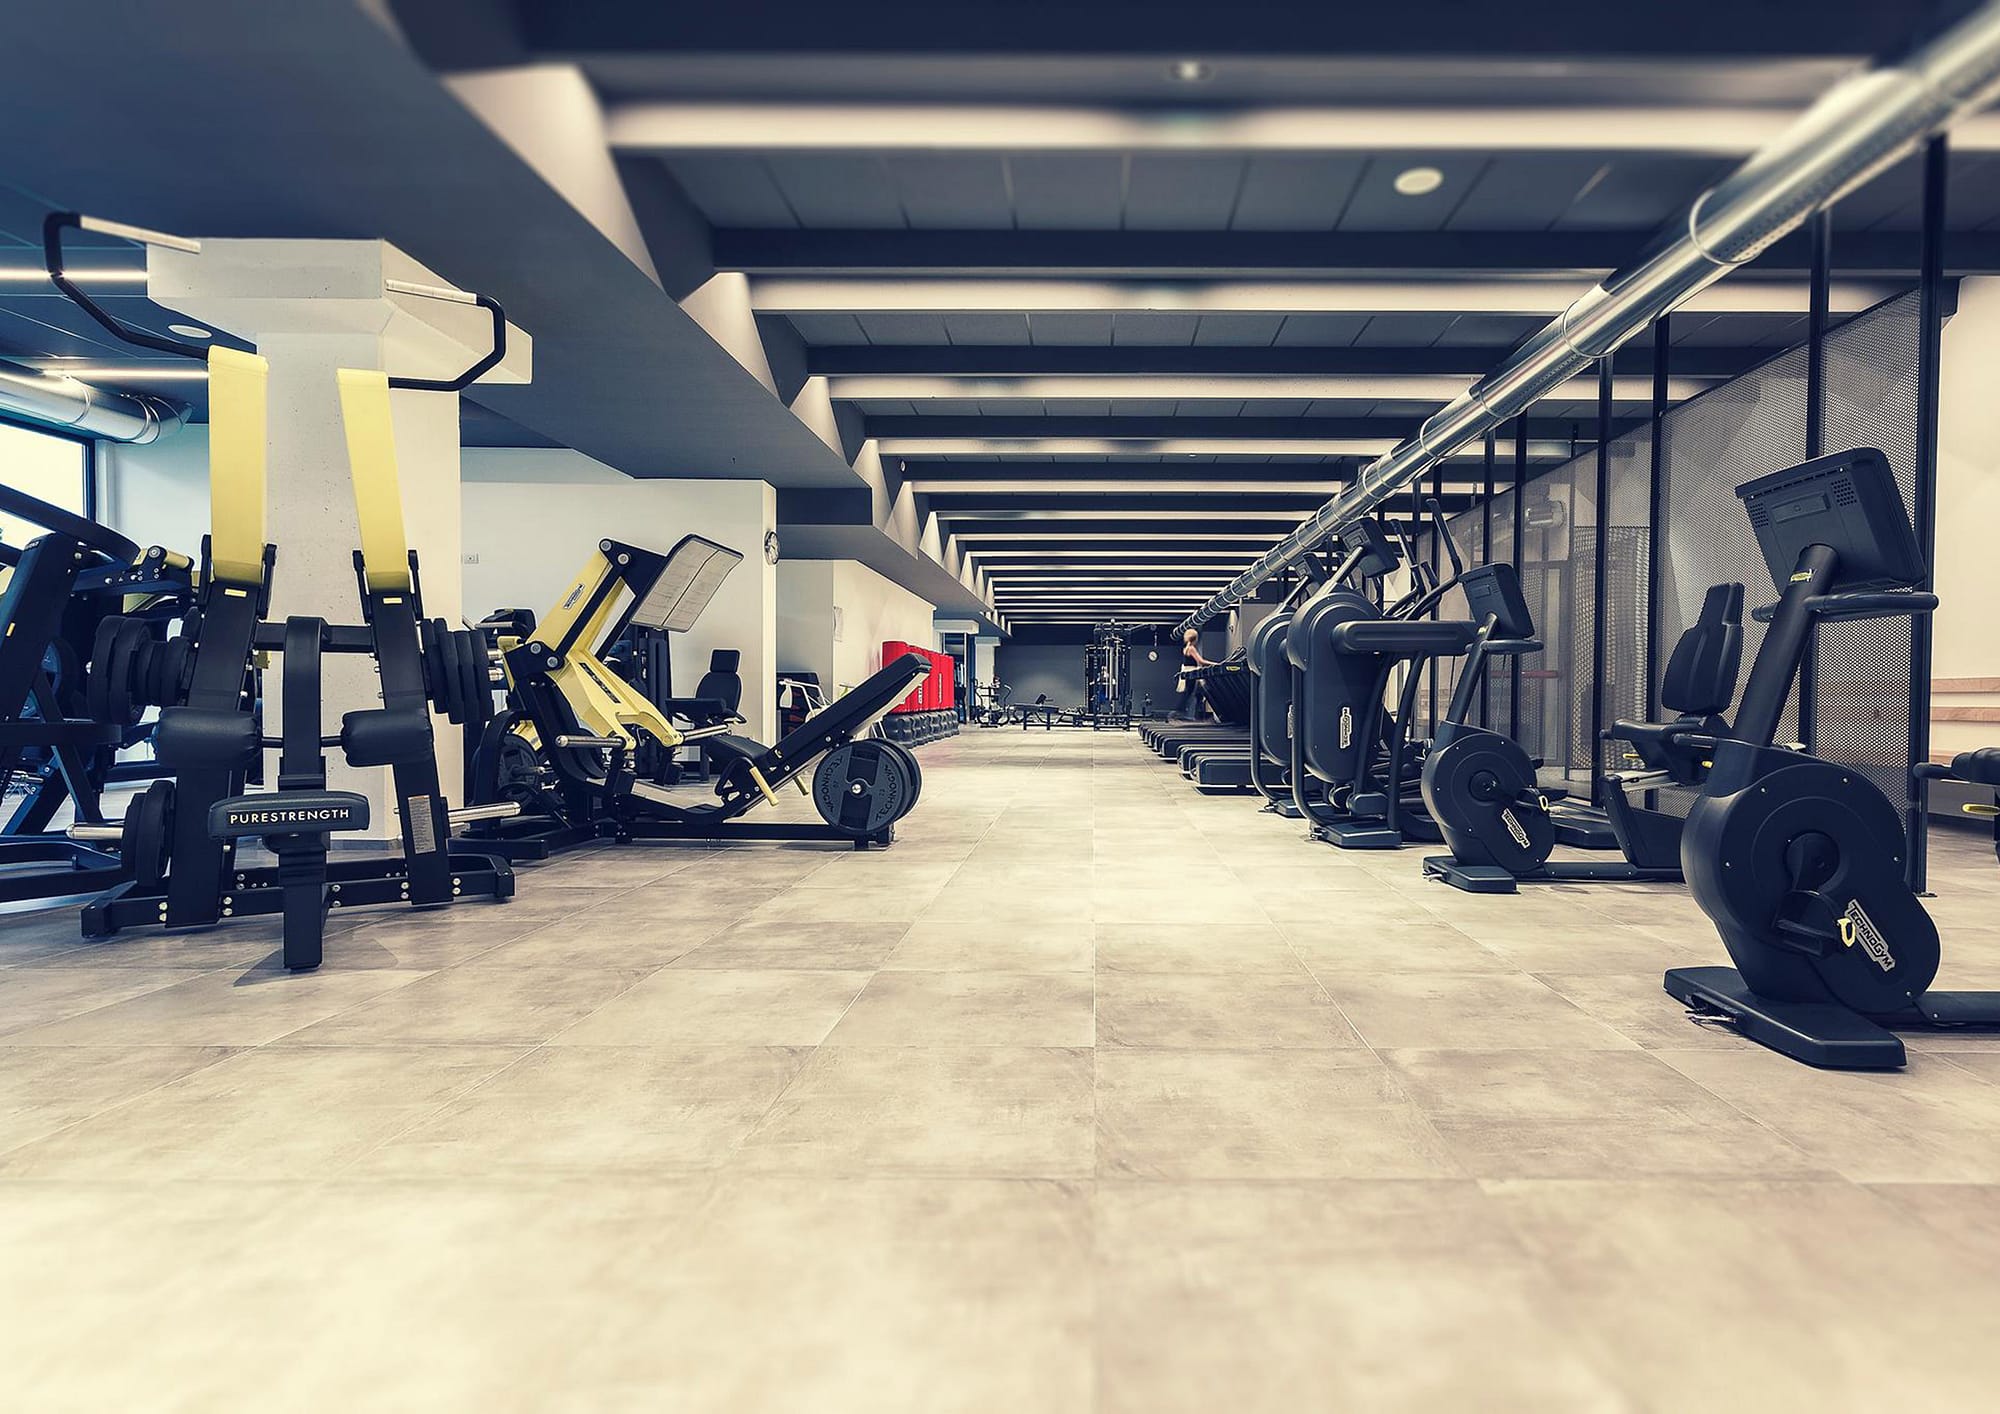 Zero Nero Fitness Club, gym floor con macchine Purestrength e Cardio Technogym